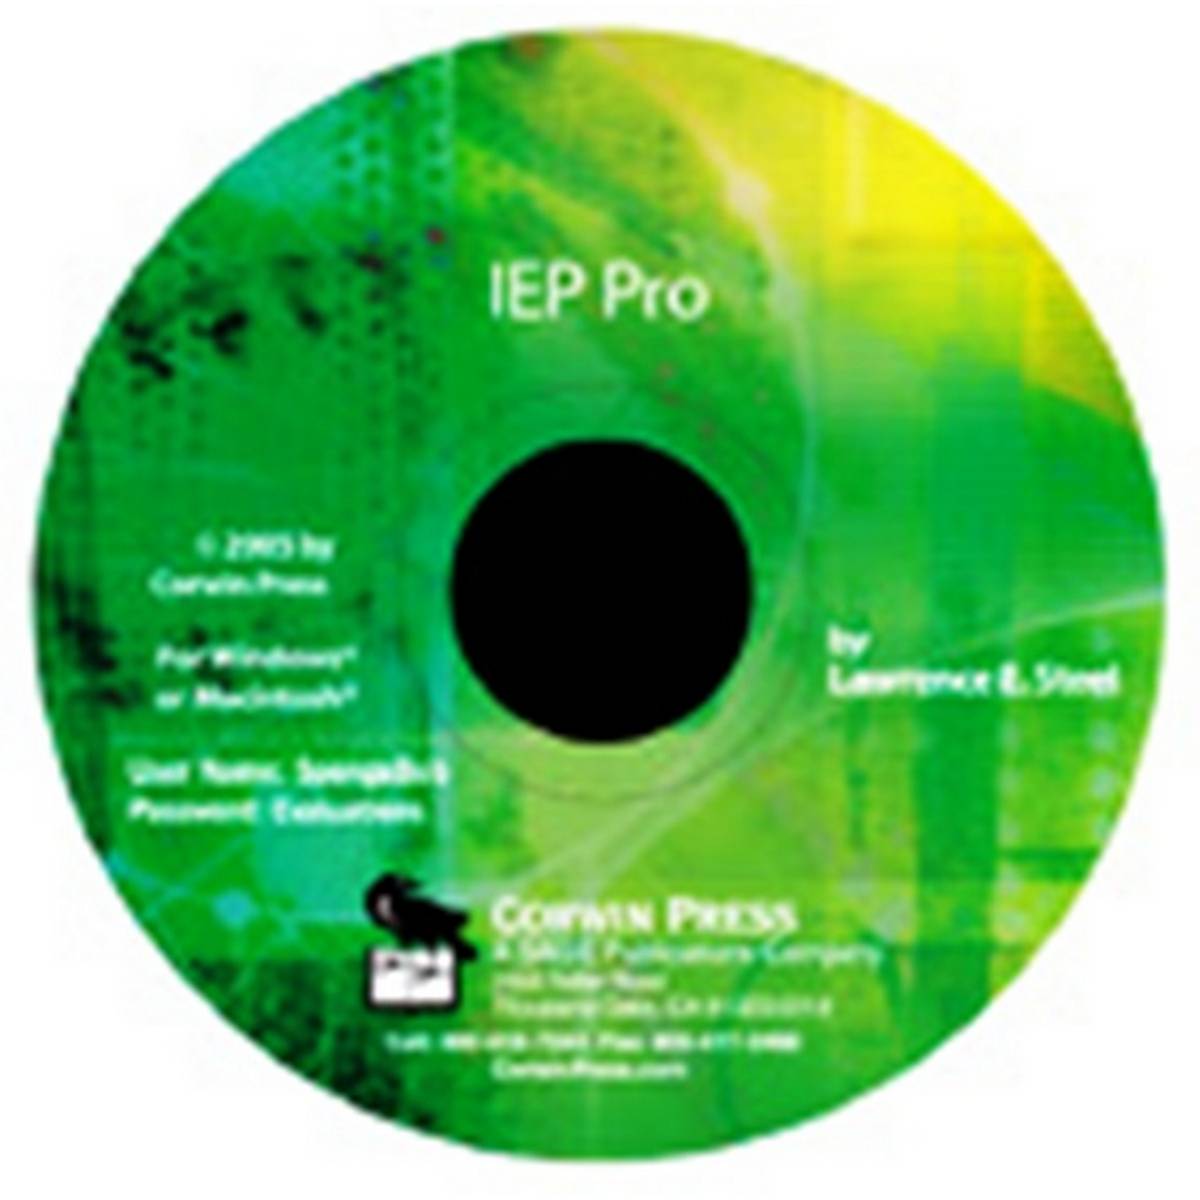 IEP Pro v.1 - Software for Schools